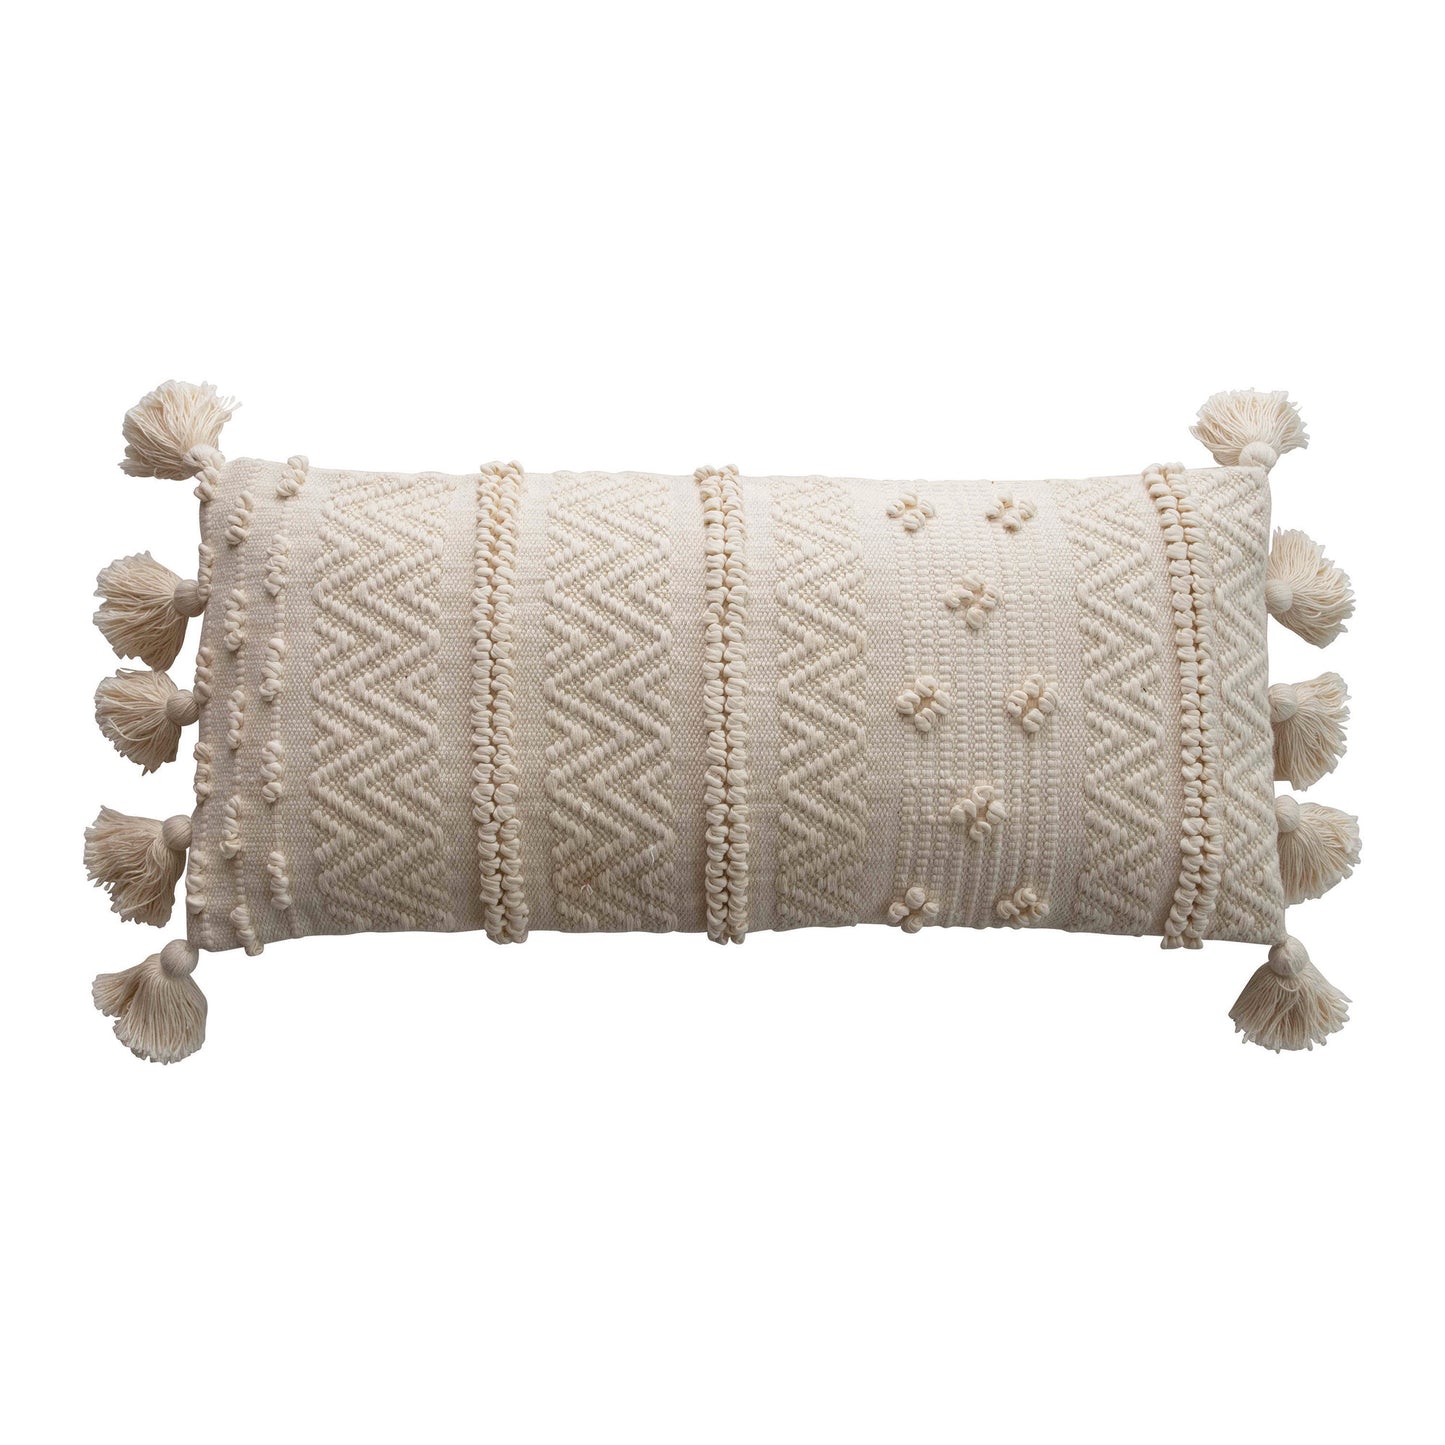 Woven Cotton Lumbar Pillow w/ Poms